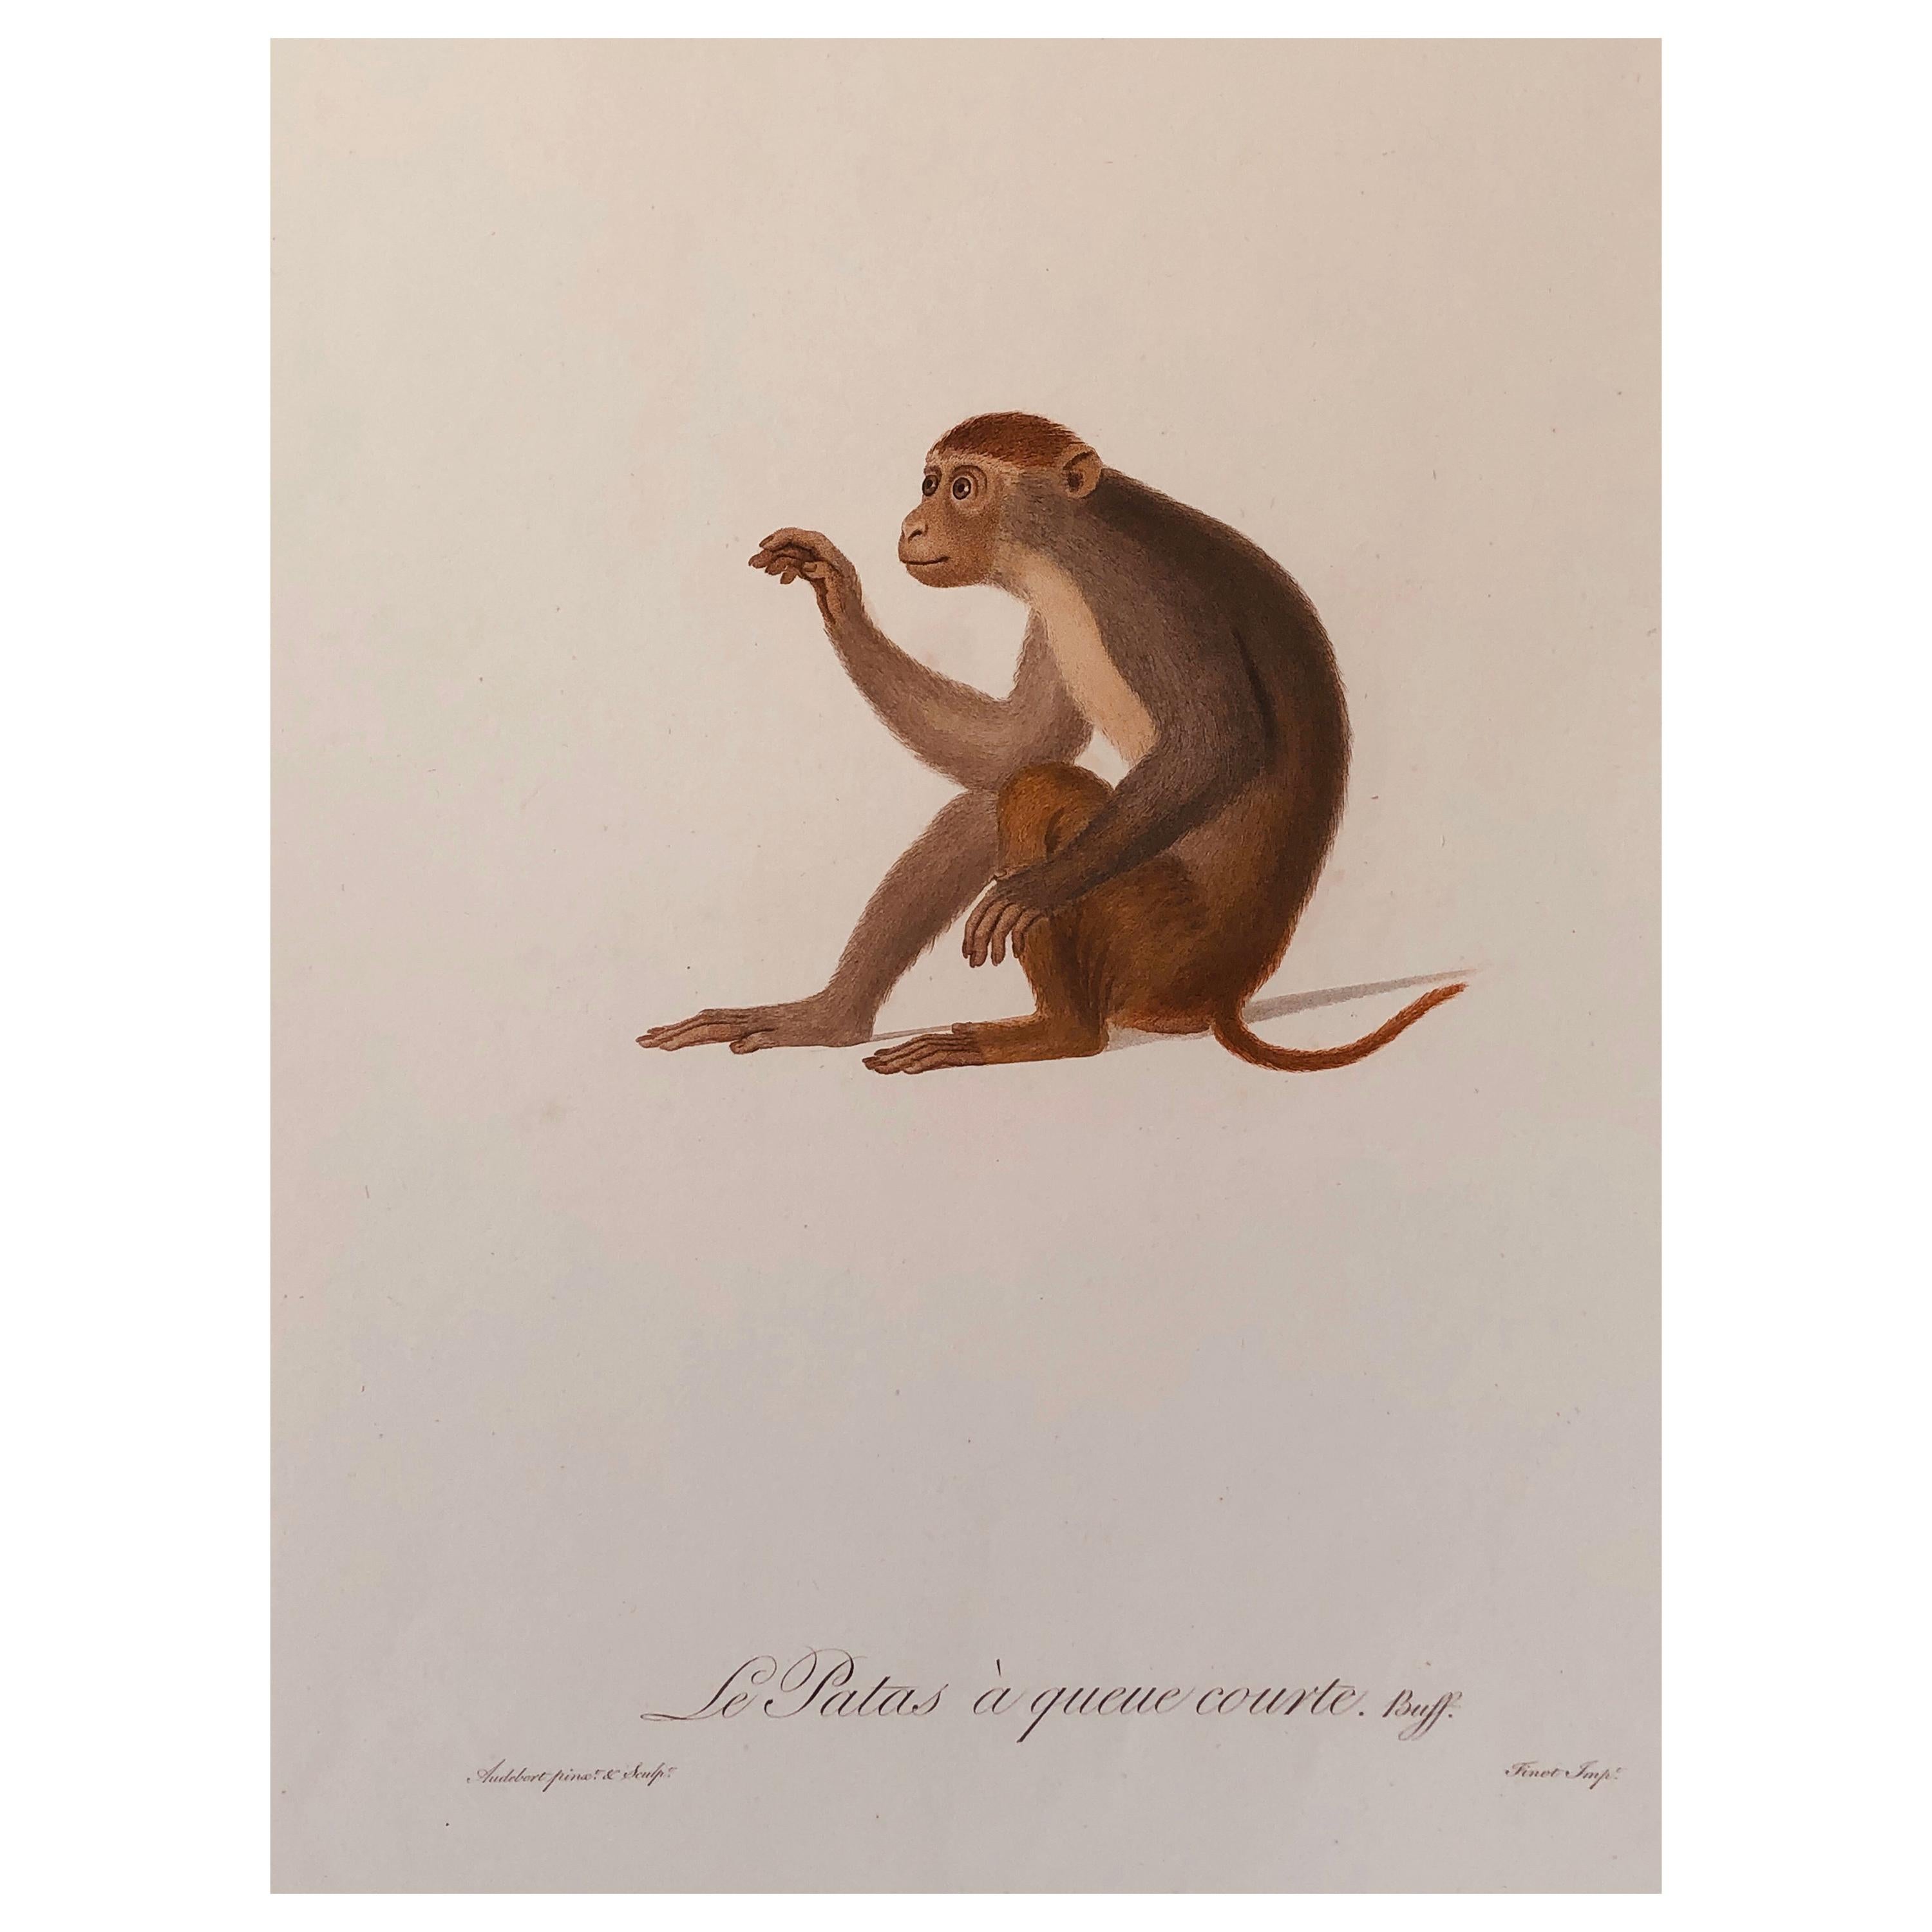 Jean-Baptiste Audebert Hand-Colored Engraving of a Patas Monkey